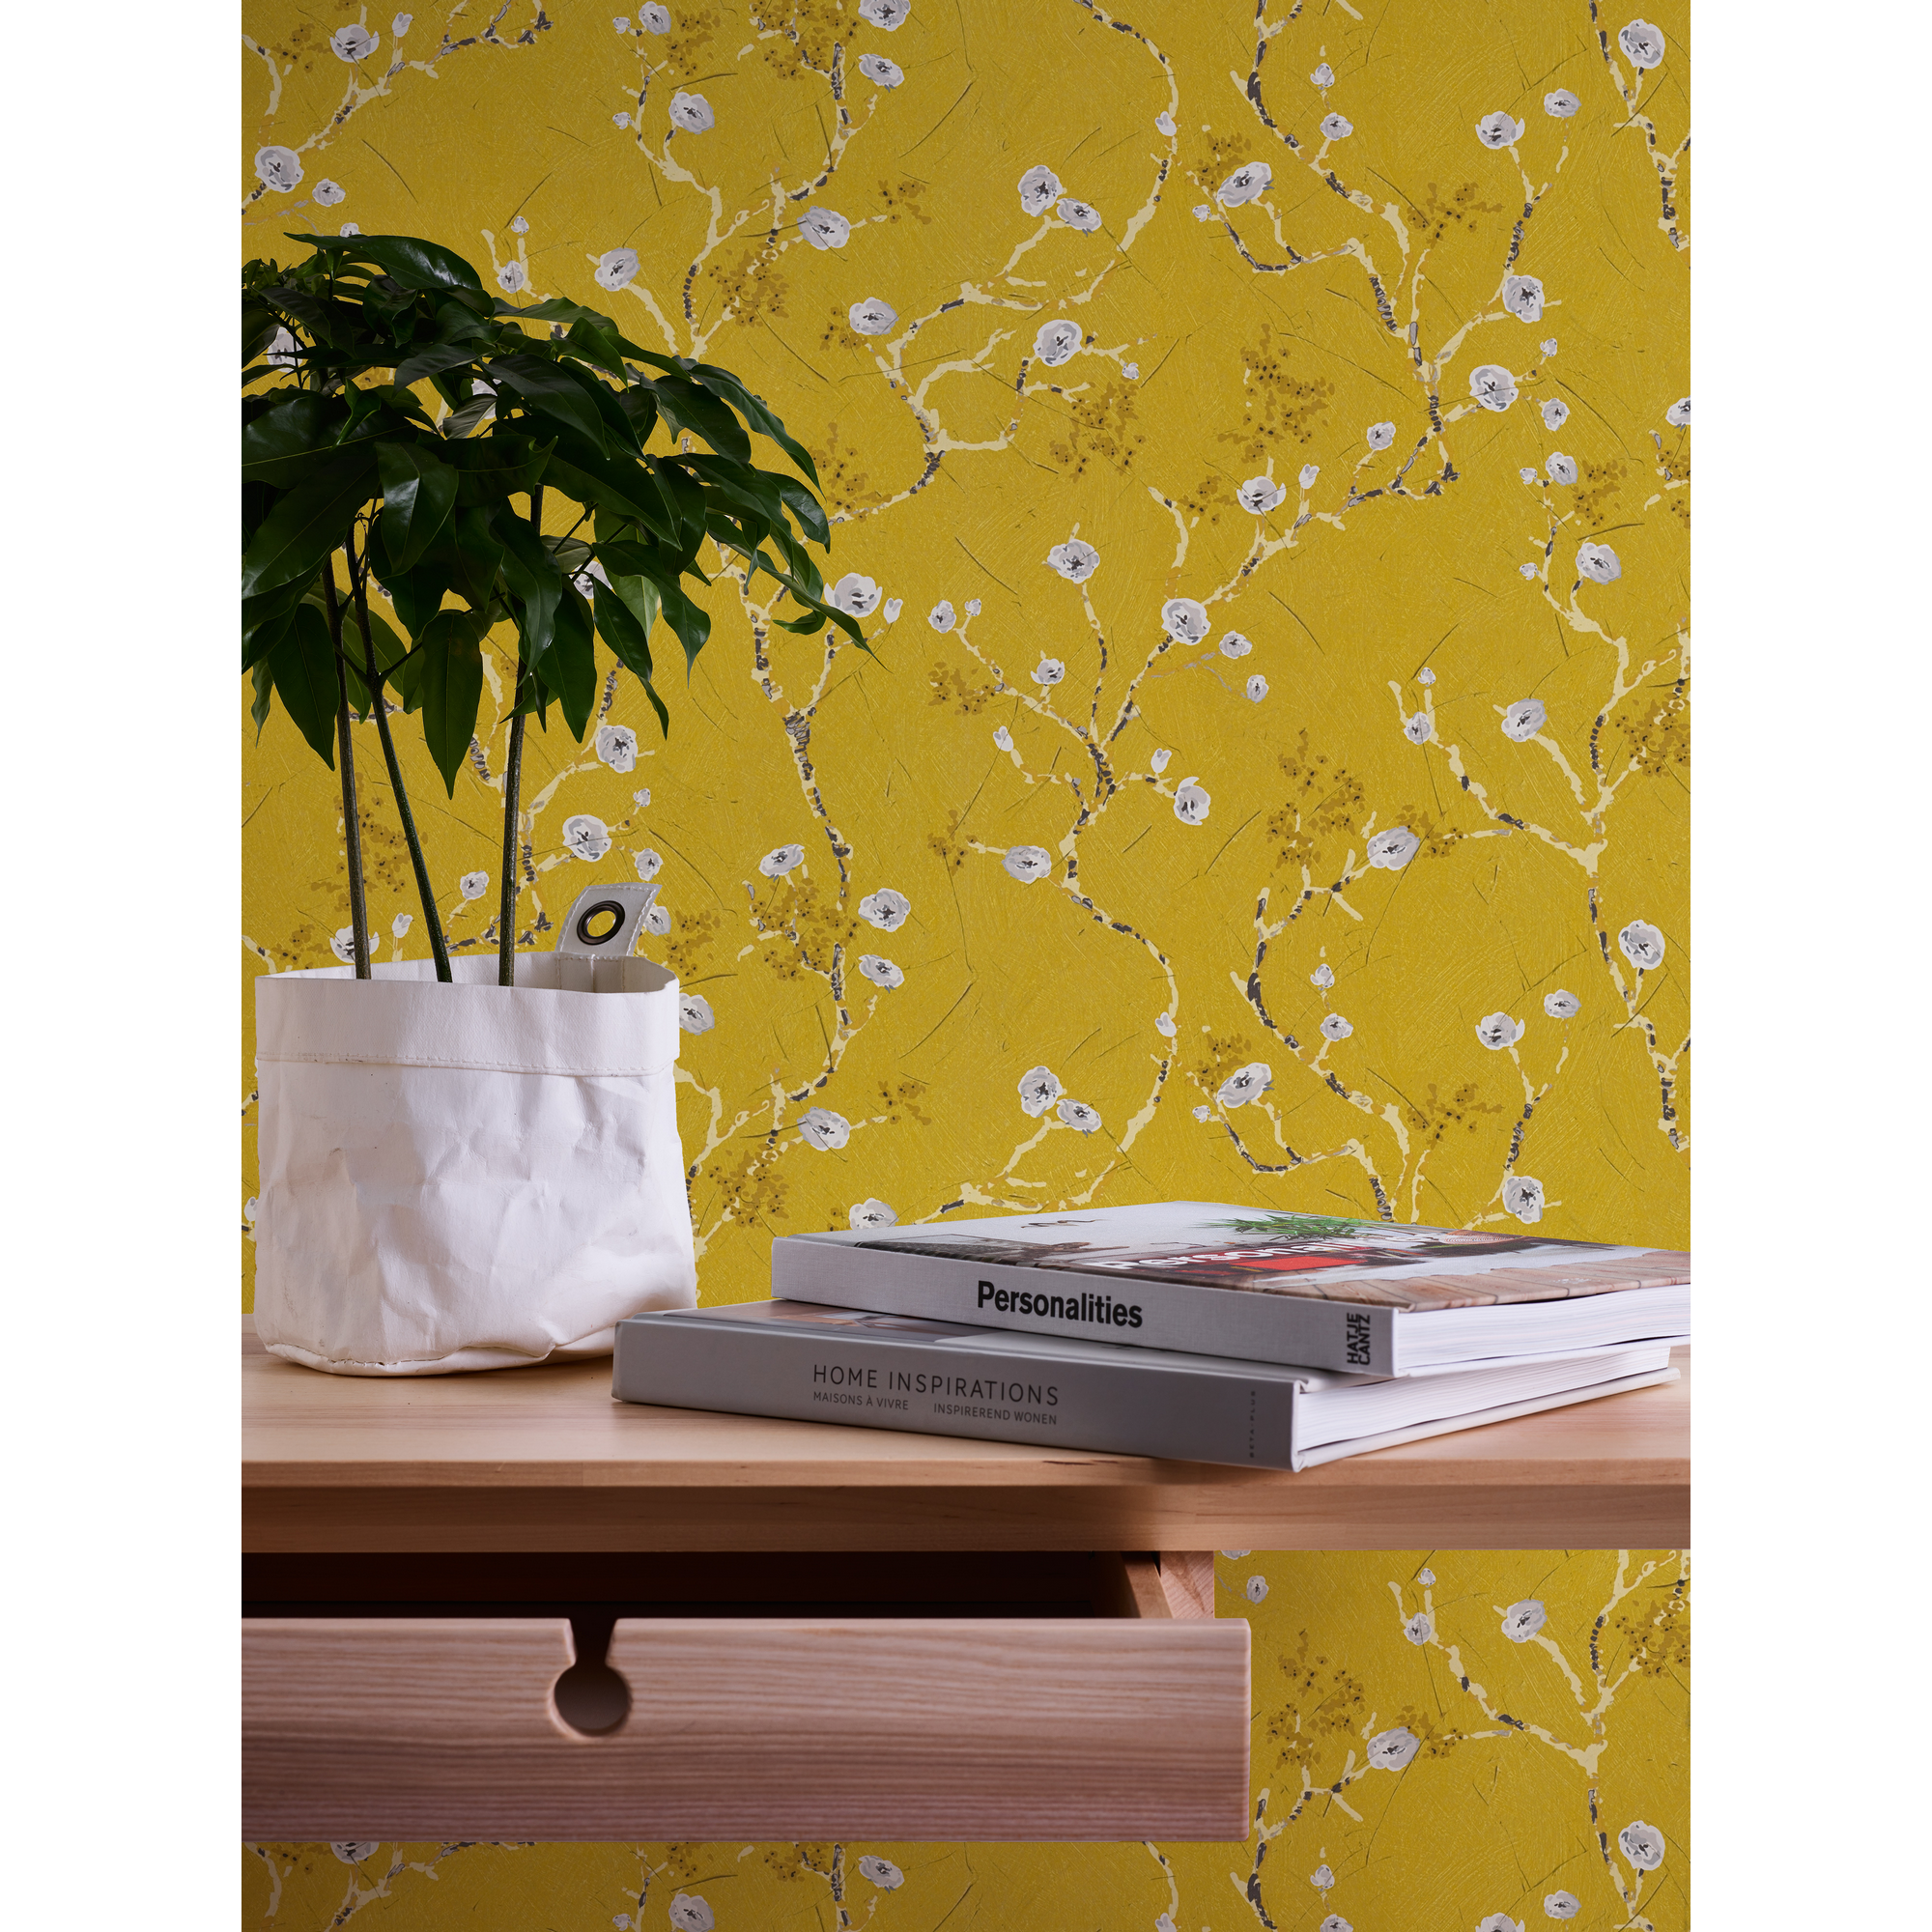 Vliestapete 'Pint Walls' Kirschblüten gelb/grau 10,05 x 0,53 m + product picture